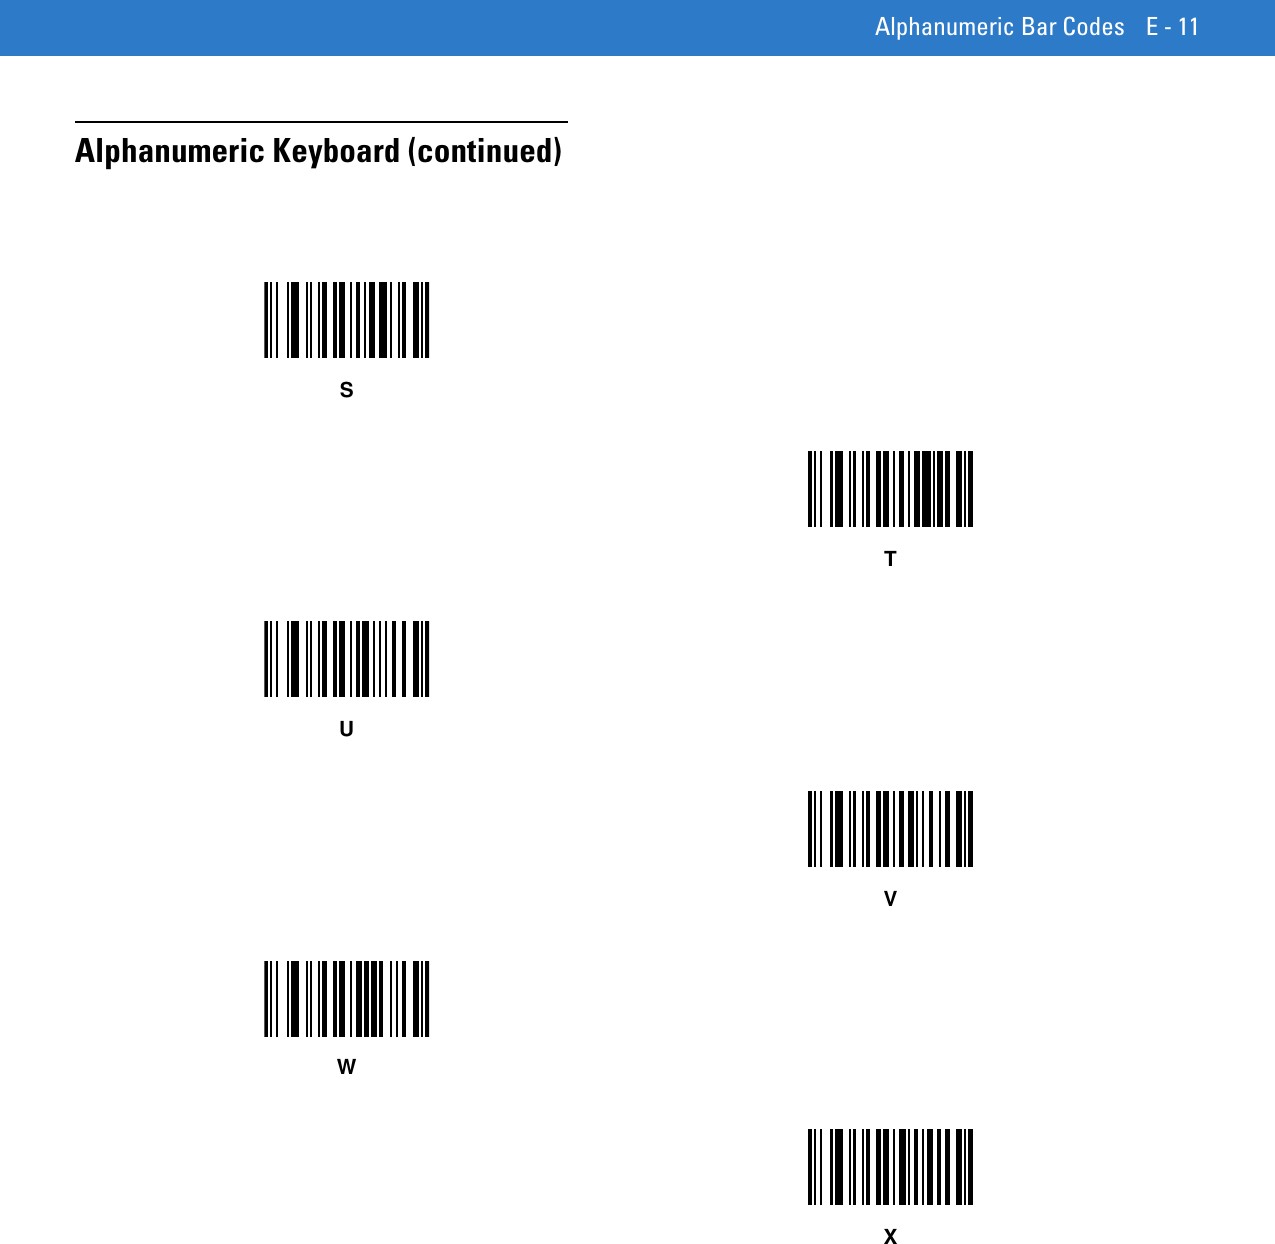 Alphanumeric Bar Codes E - 11Alphanumeric Keyboard (continued)STUVWX